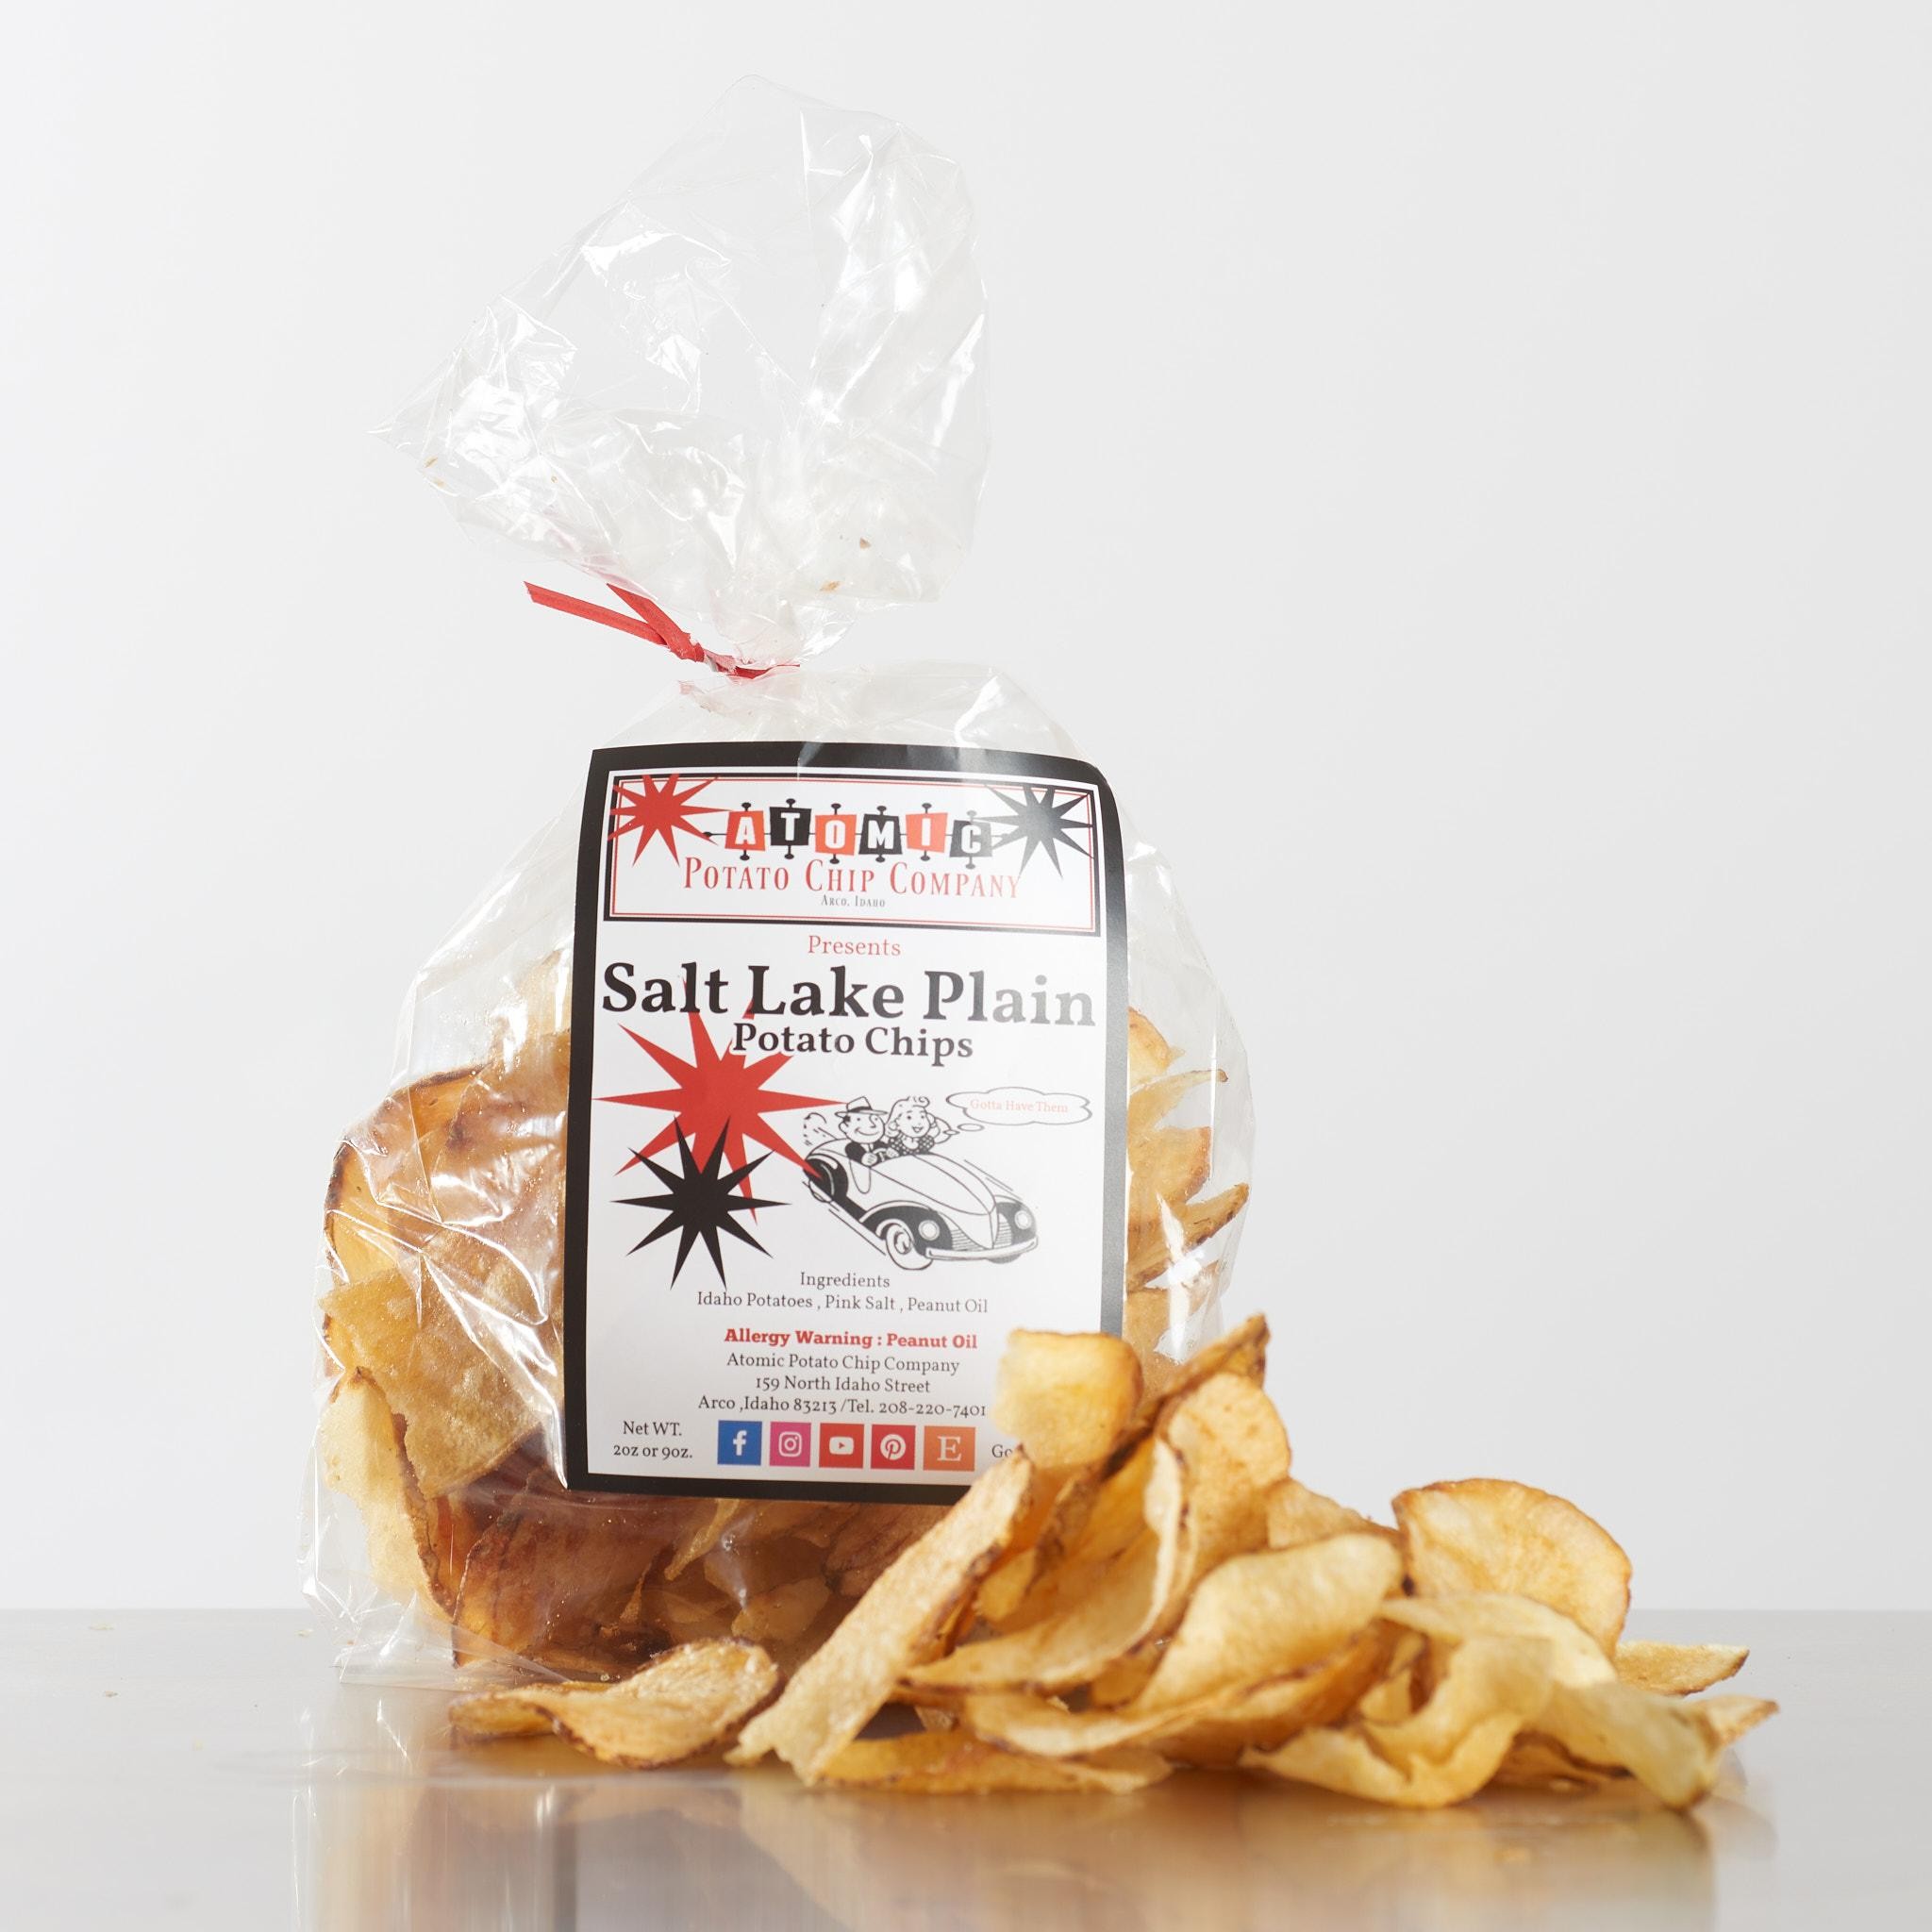 Salt Lake Plain Potato Chips